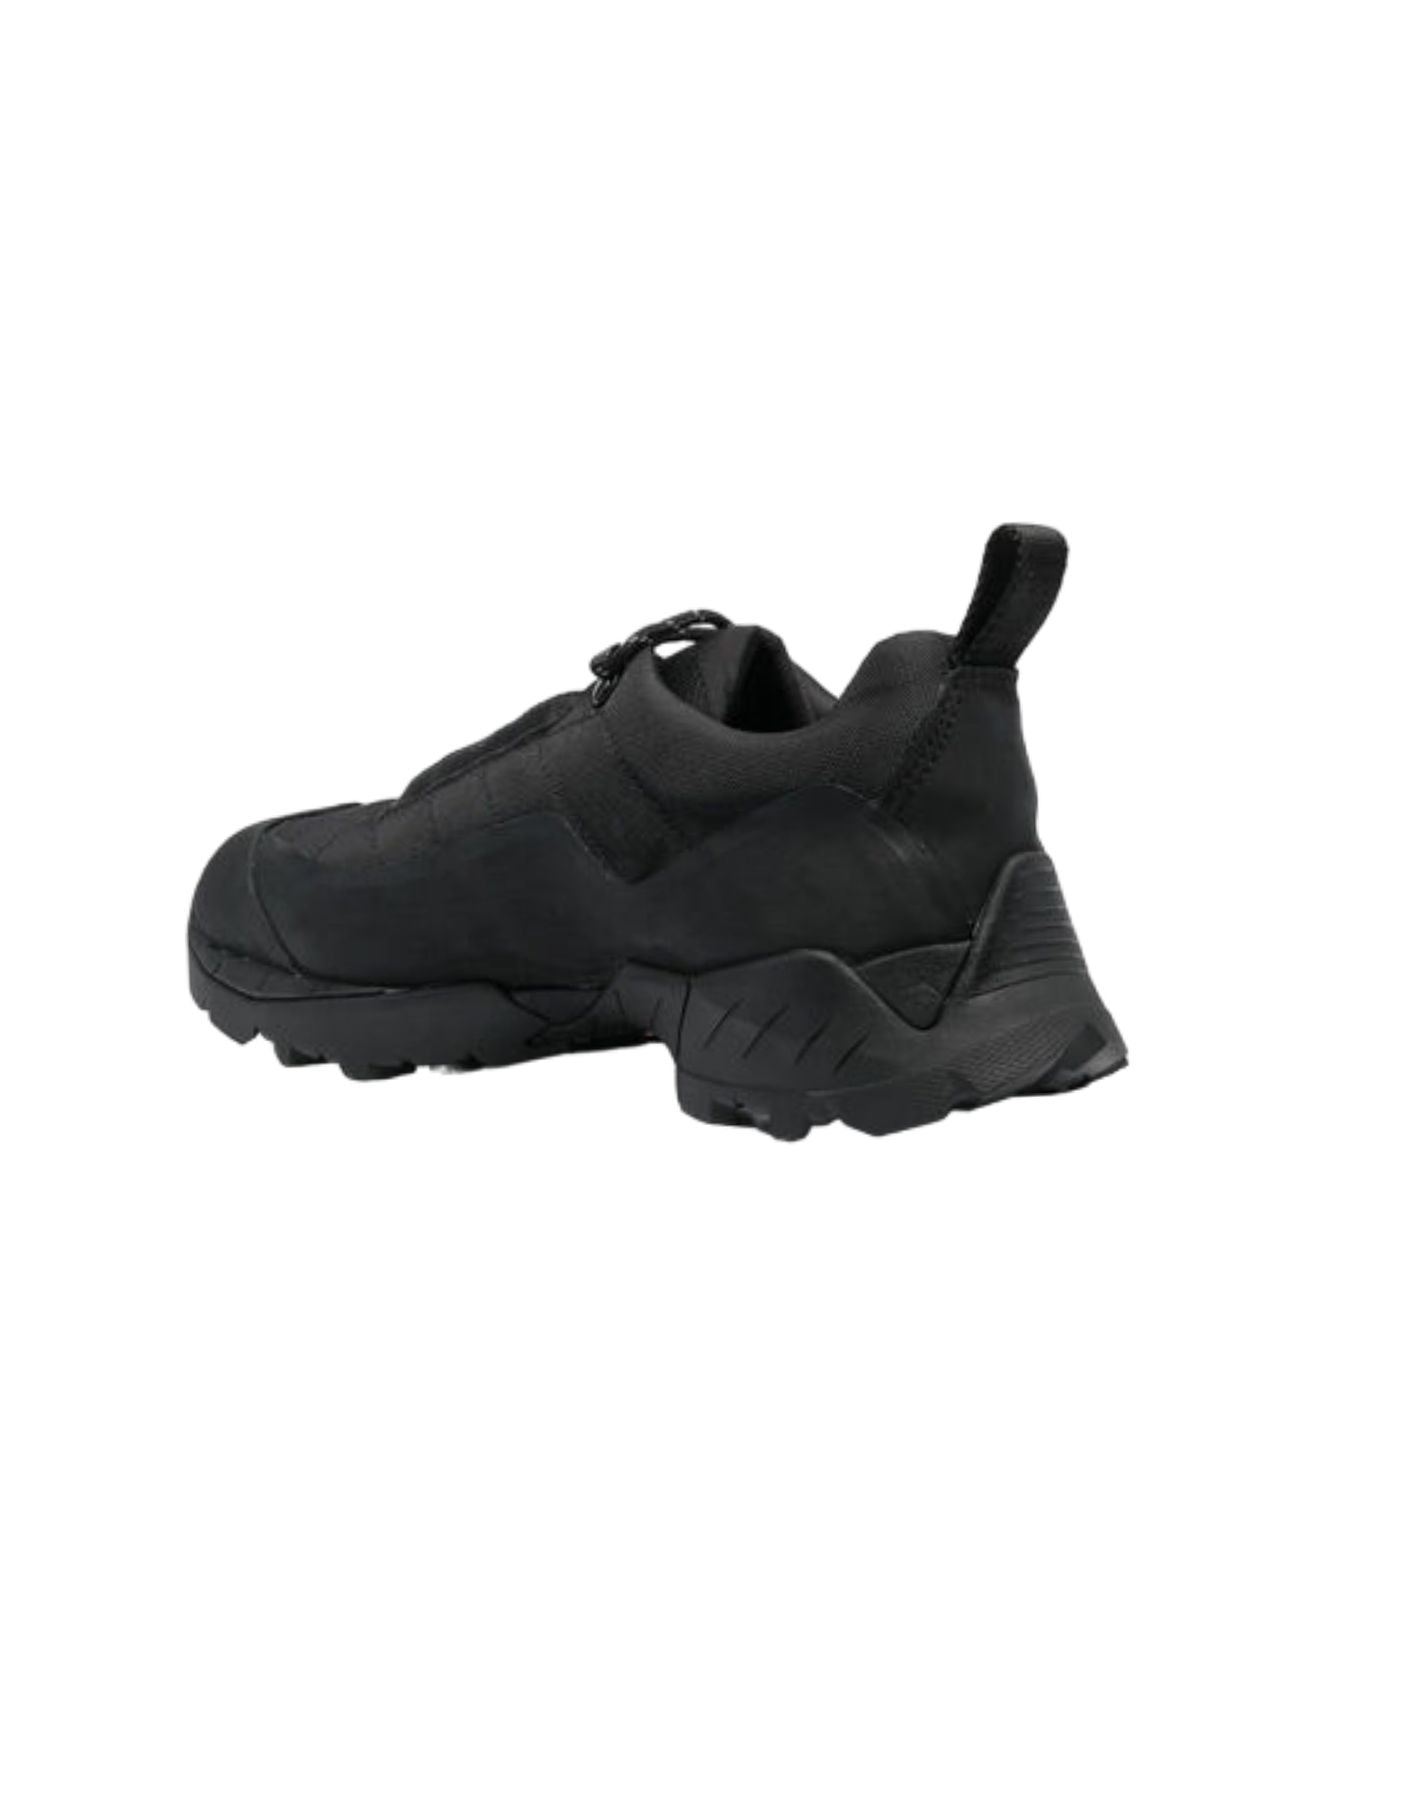 Schuhe Mann KFA10 001 Black ROA